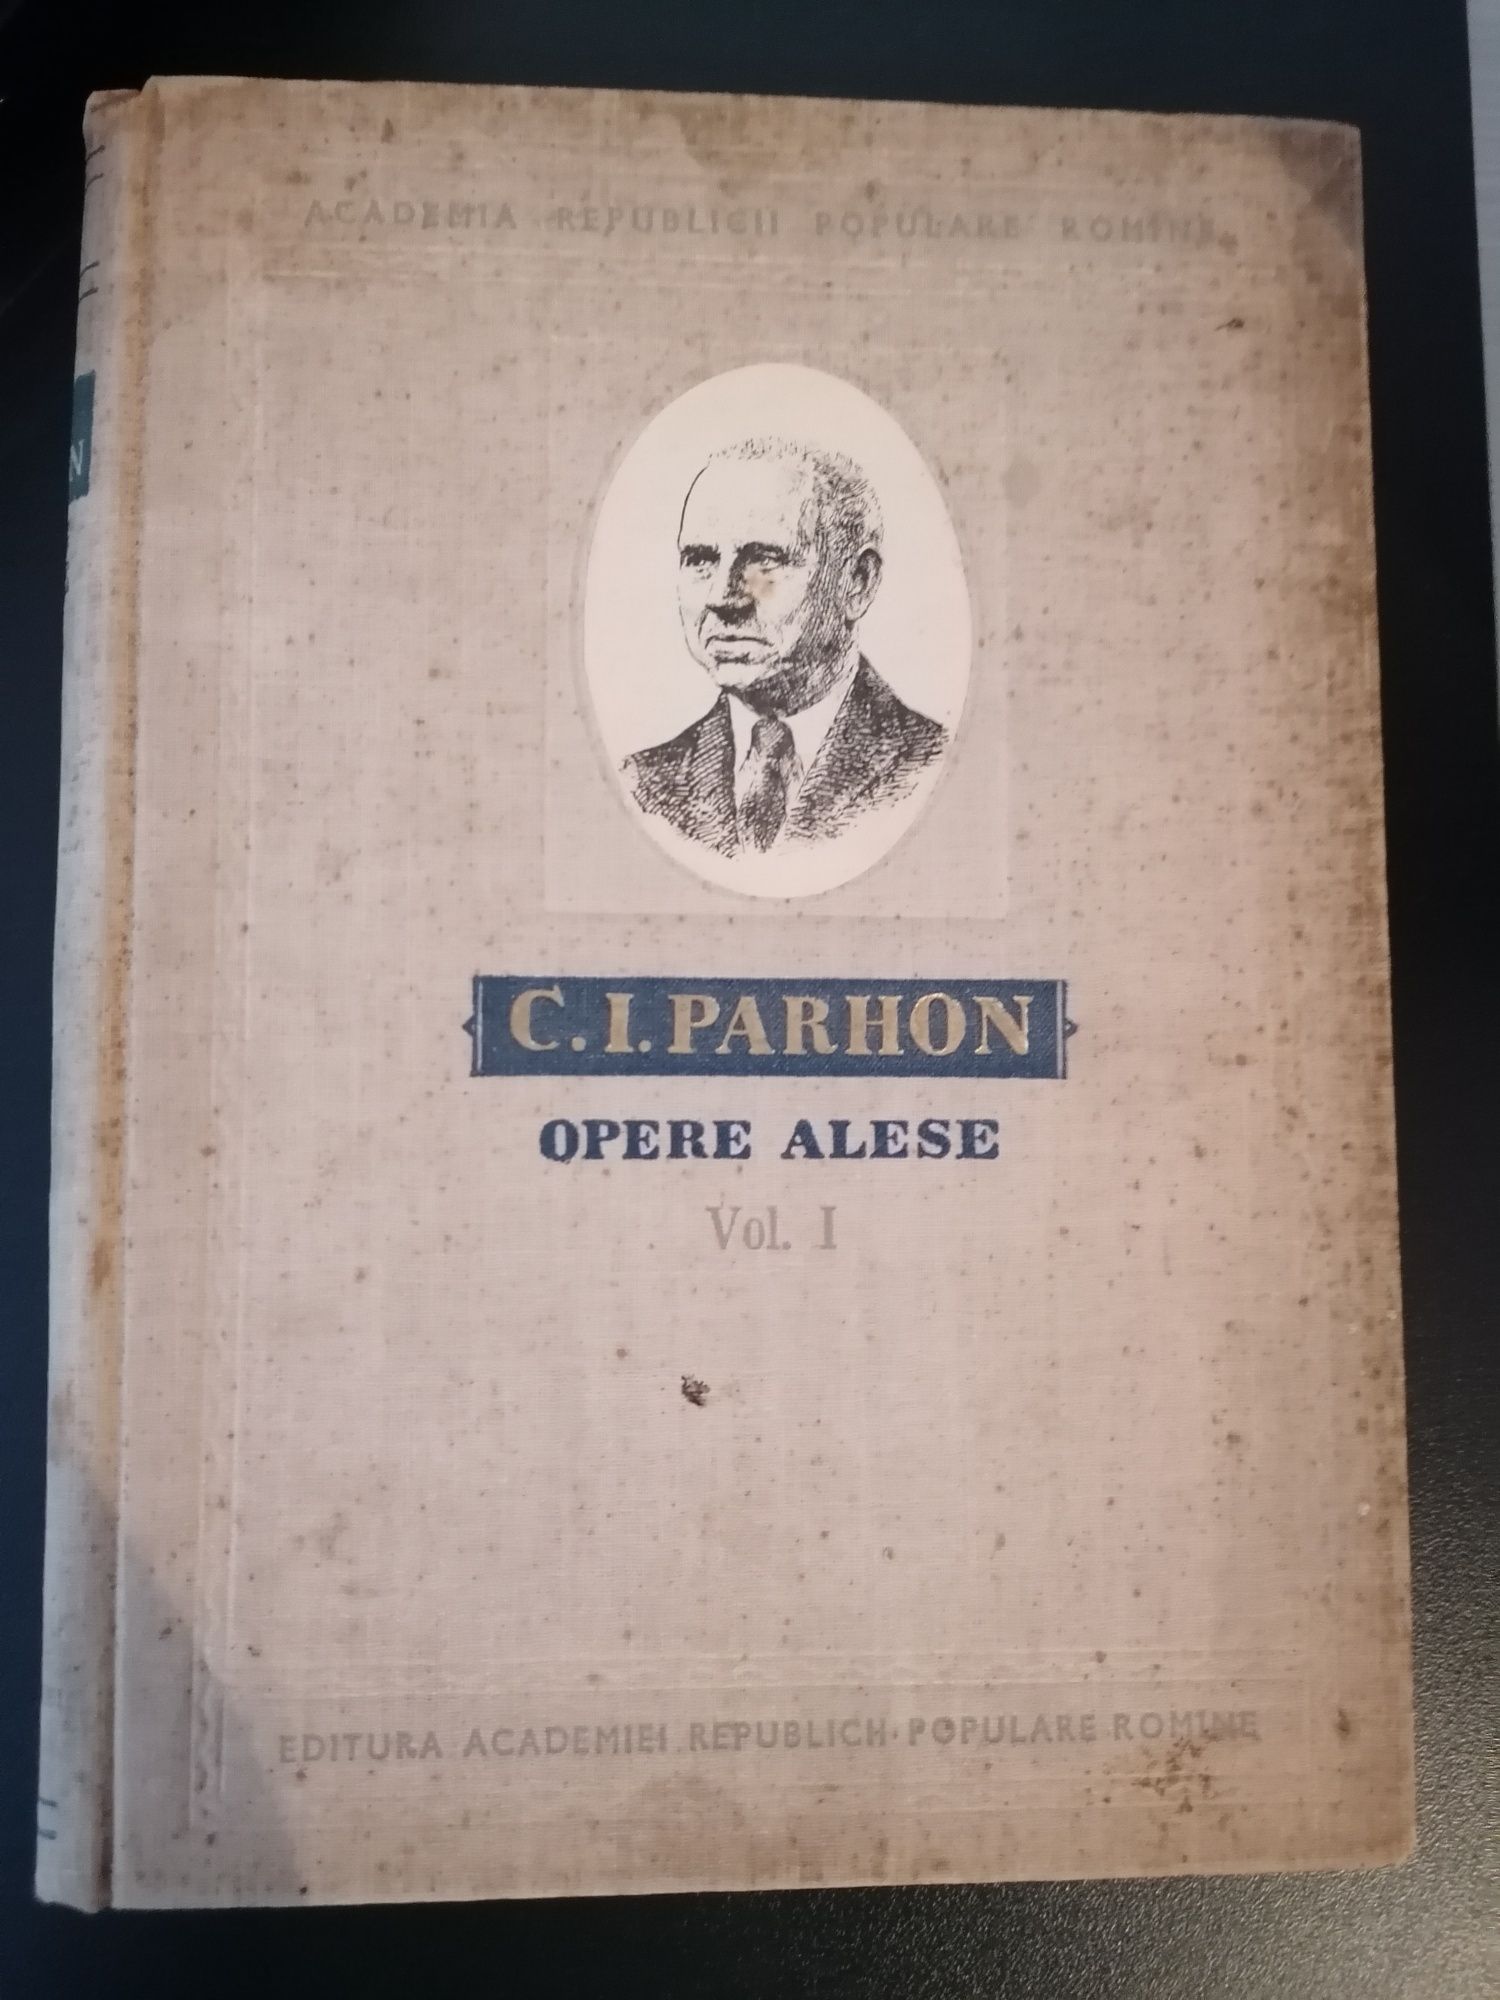 C. I. Parhon, Opere alese, vol. I-Neurologie